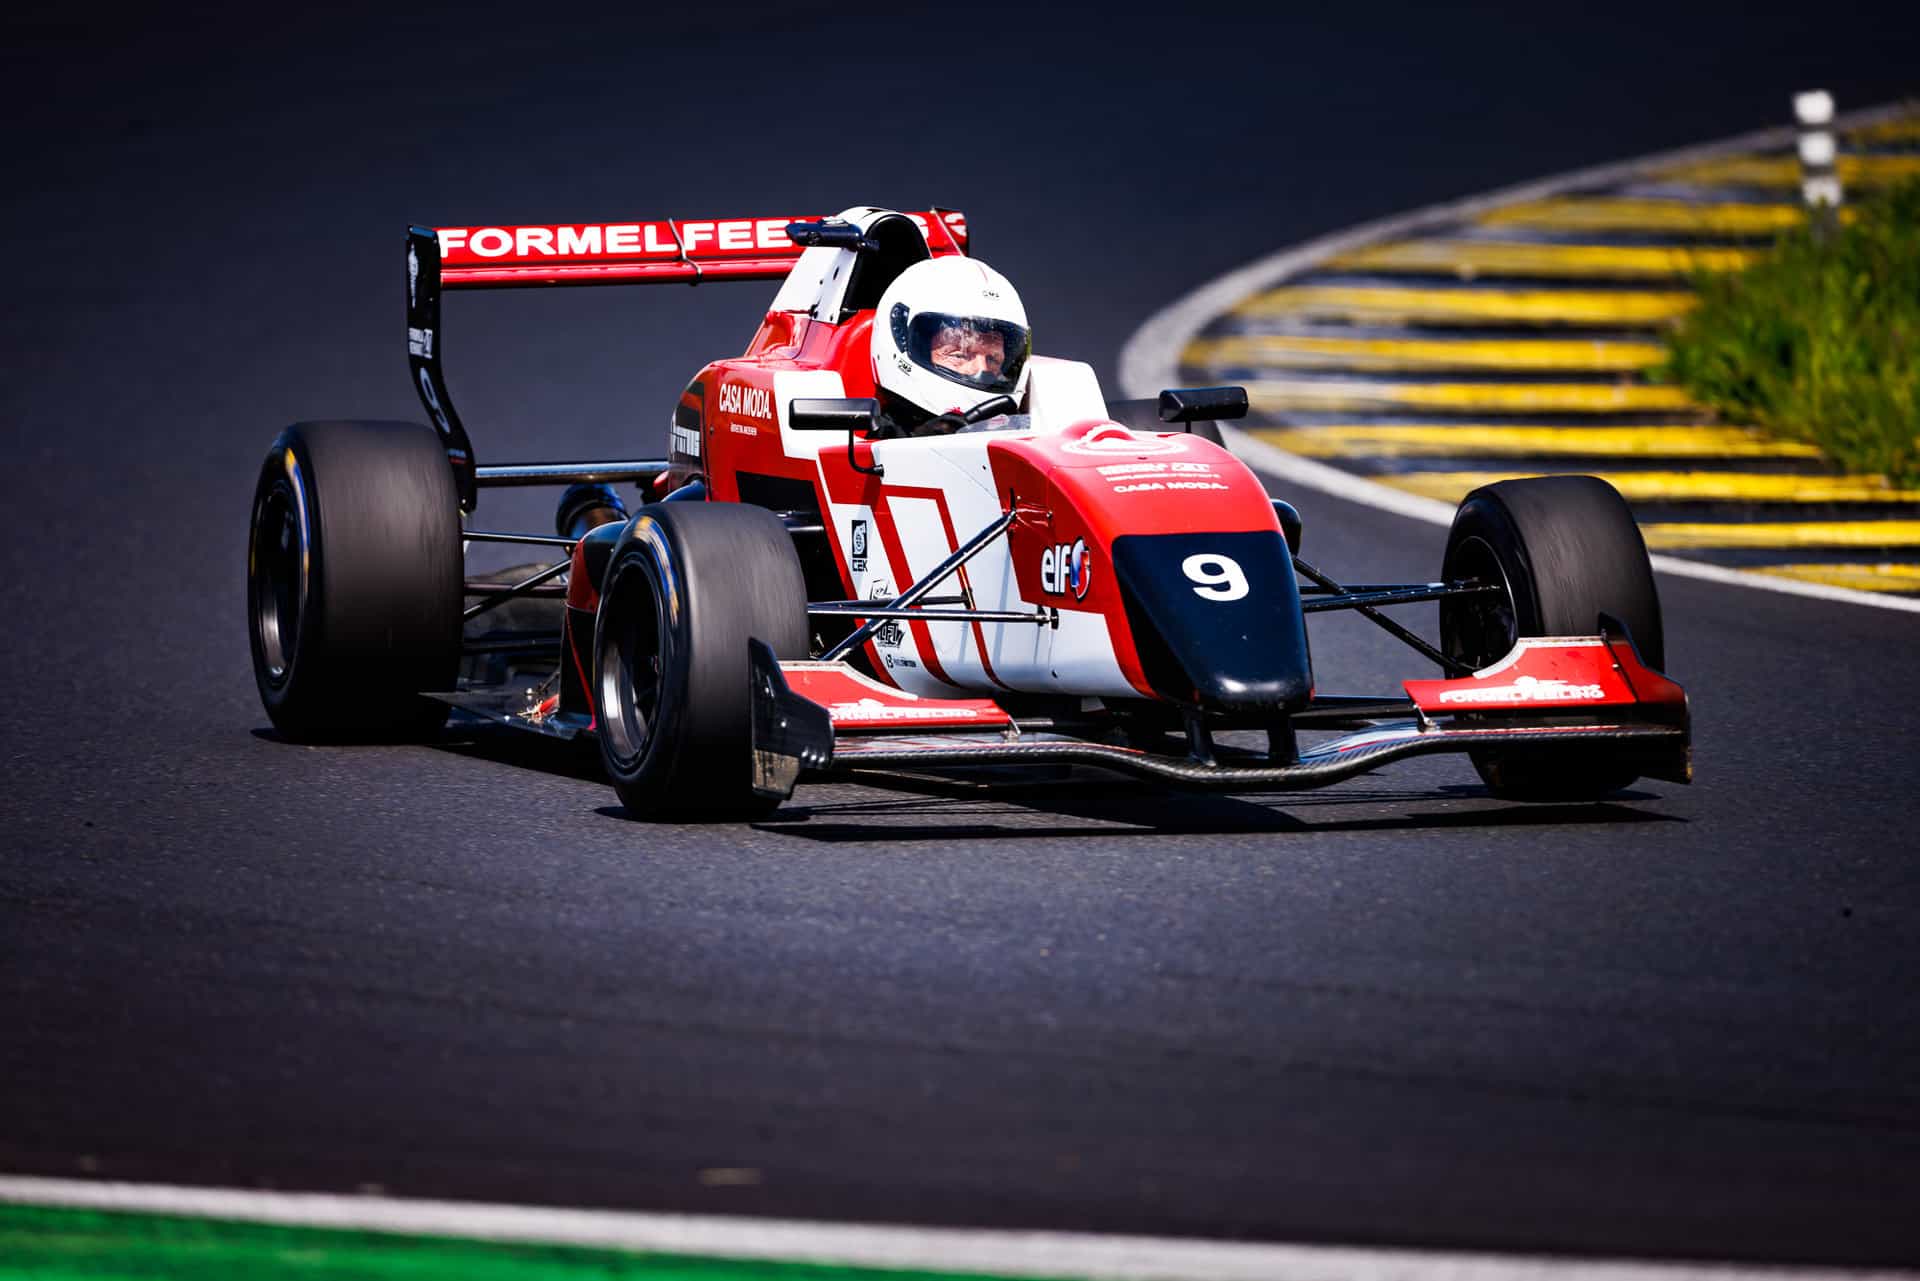 Formel Renault & 1 selber fahren - Formelfeeling